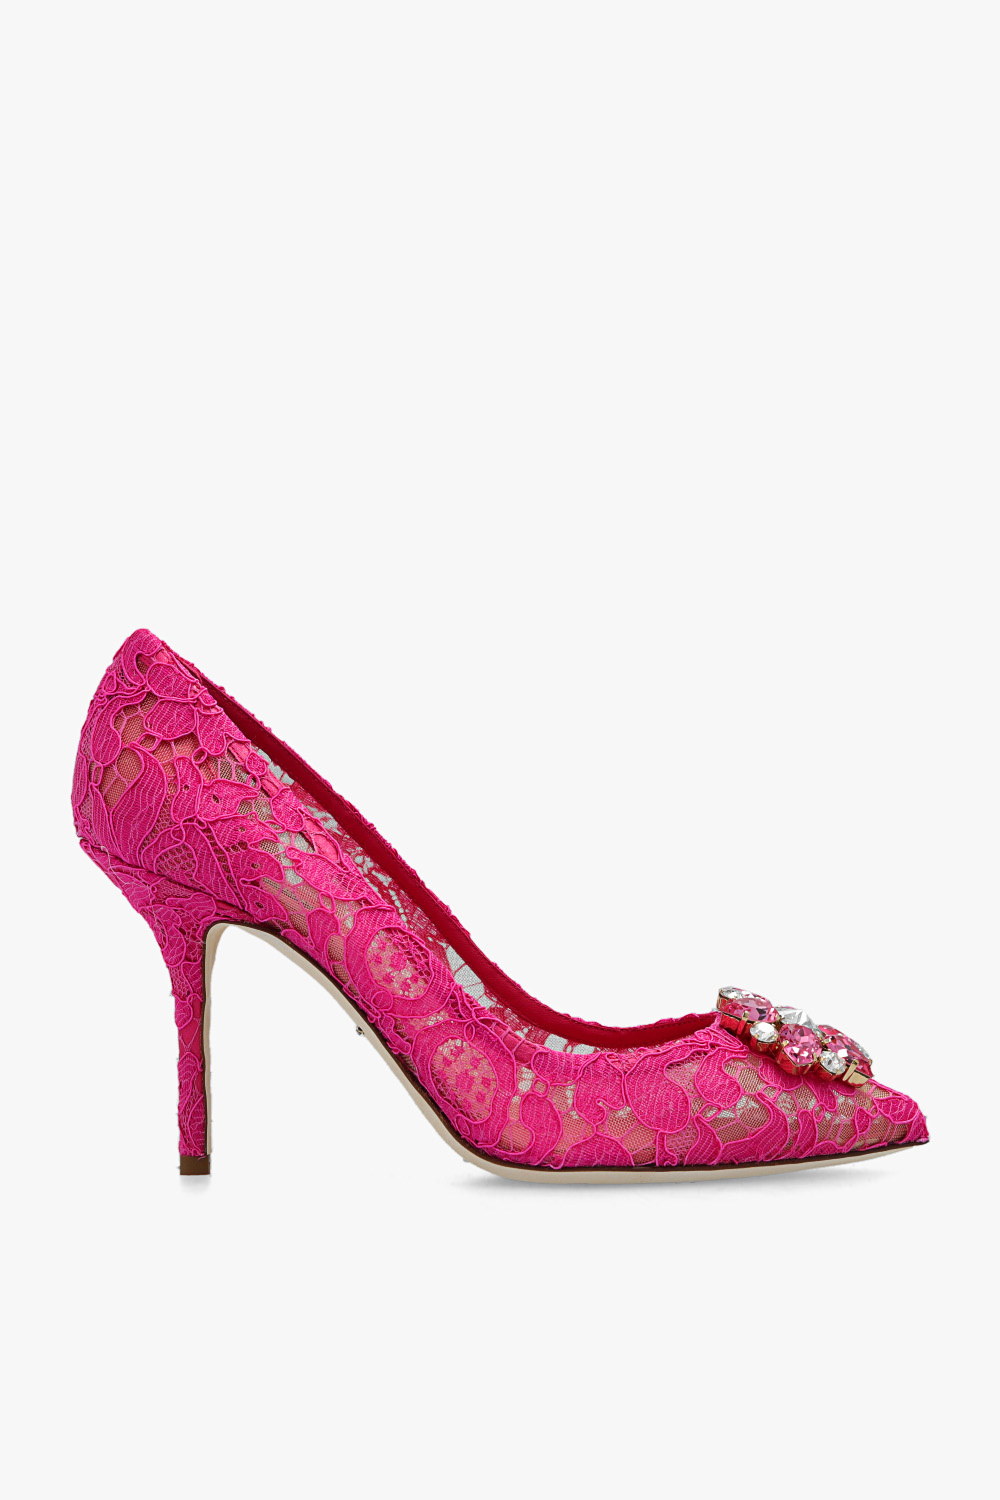 Dolce & Gabbana Lace stiletto pumps